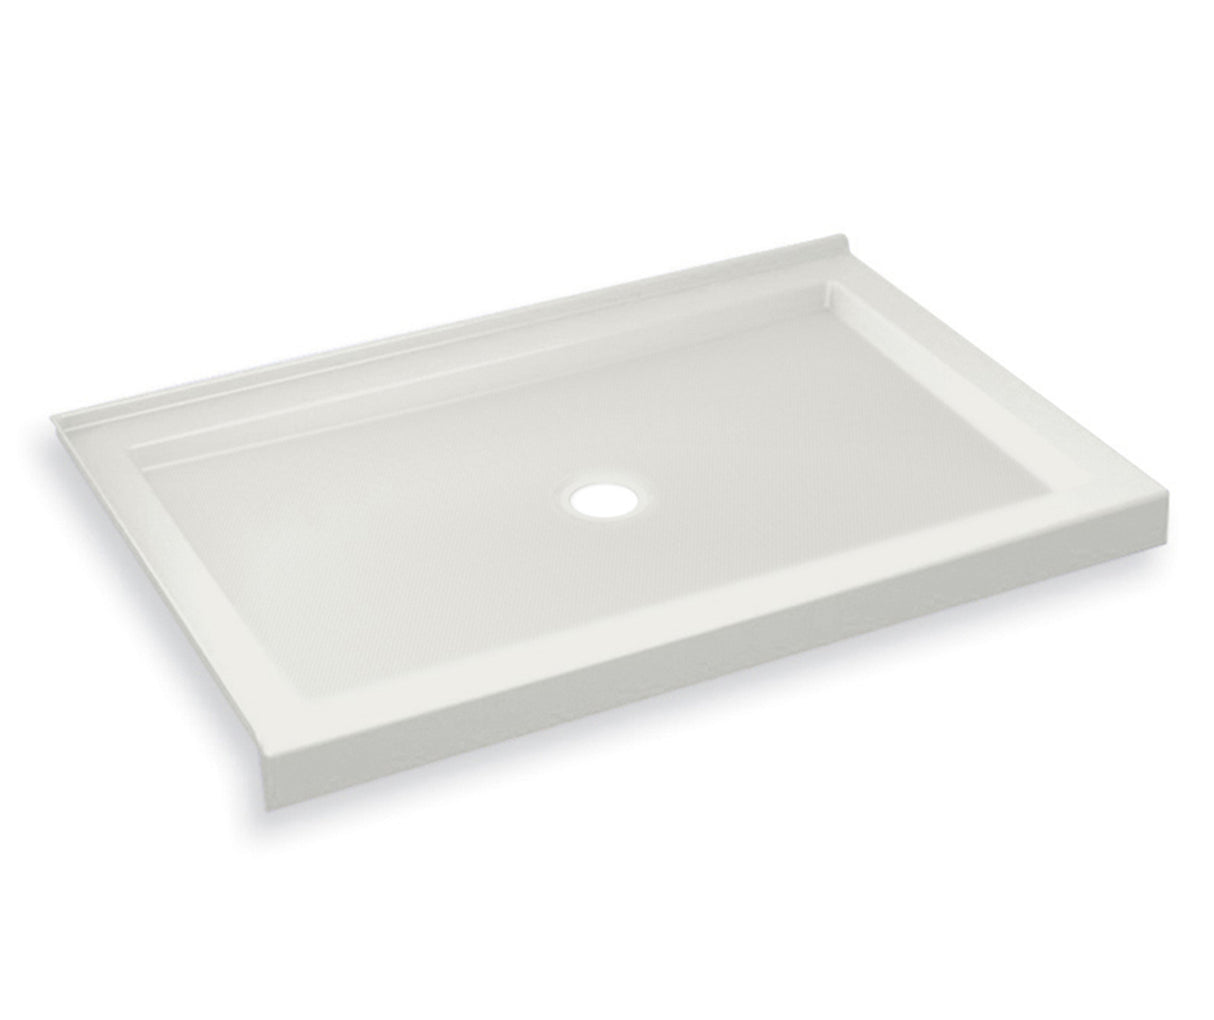 MAAX 410003-542-001-000 B3Round 4836 Acrylic Corner Left Shower Base in White with Anti-slip Bottom with Center Drain